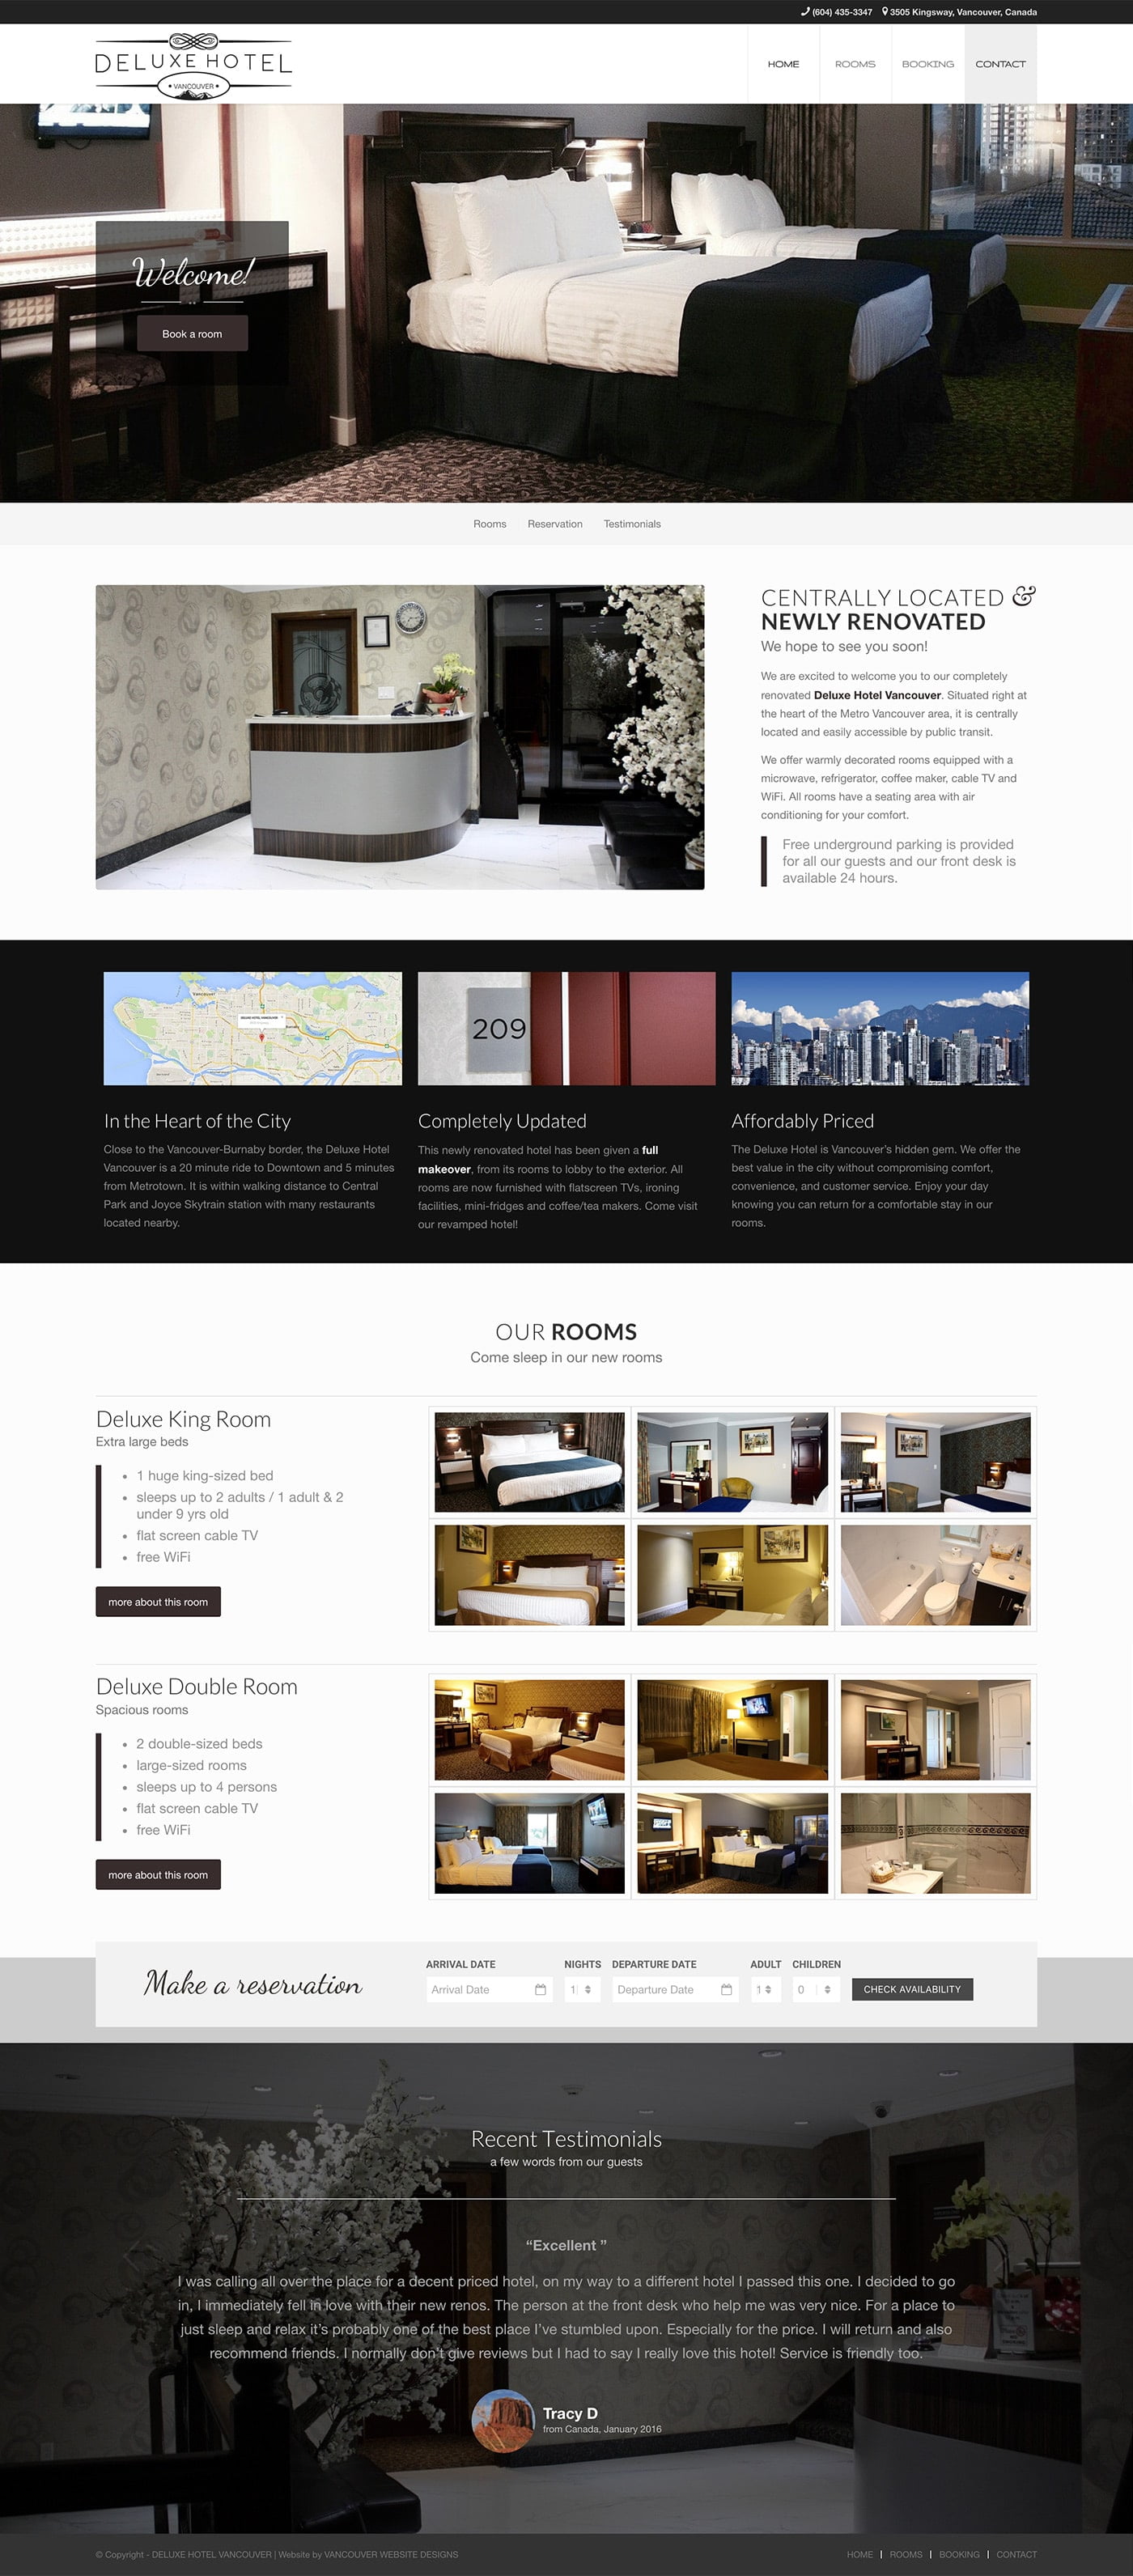 Deluxe-Hotel-Vancouver-web-design-1400-min